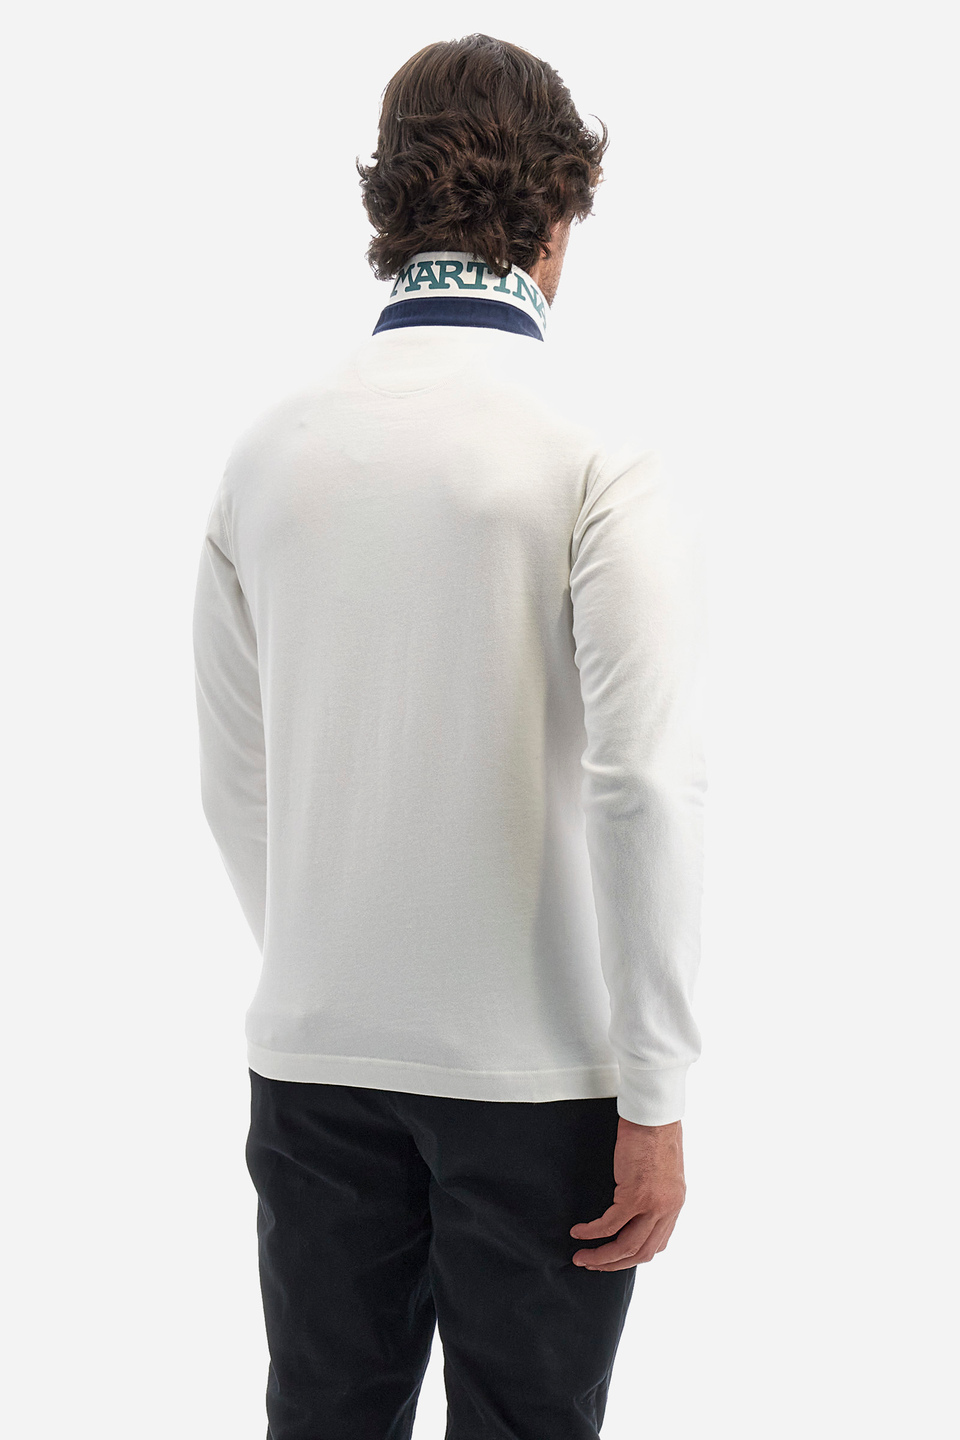 Herren -Poloshirt regular fit - Wilfredo | La Martina - Official Online Shop